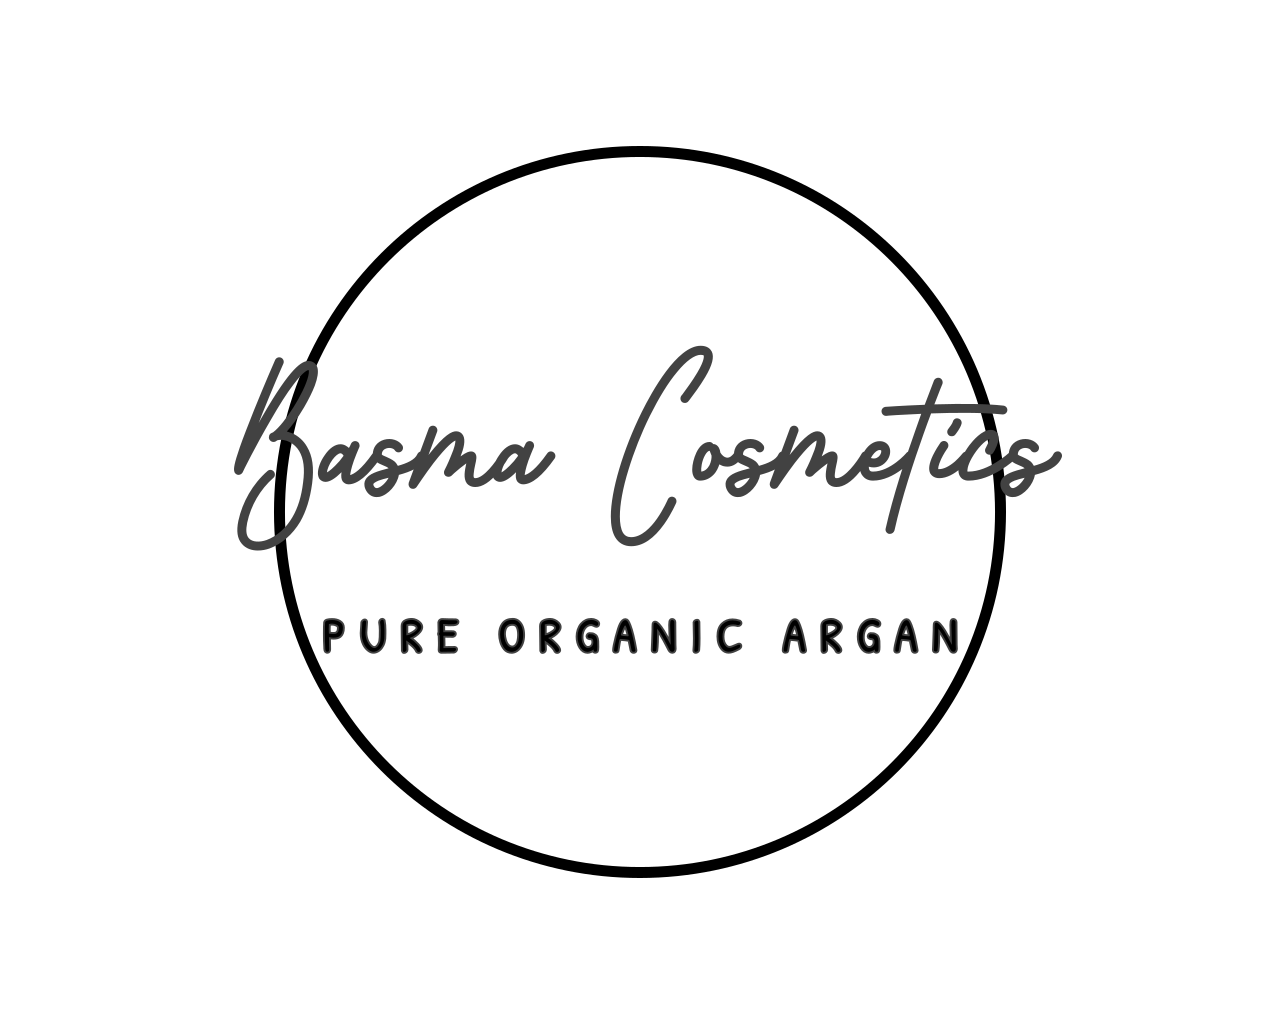 PURE ORGANIC ARGAN's web page